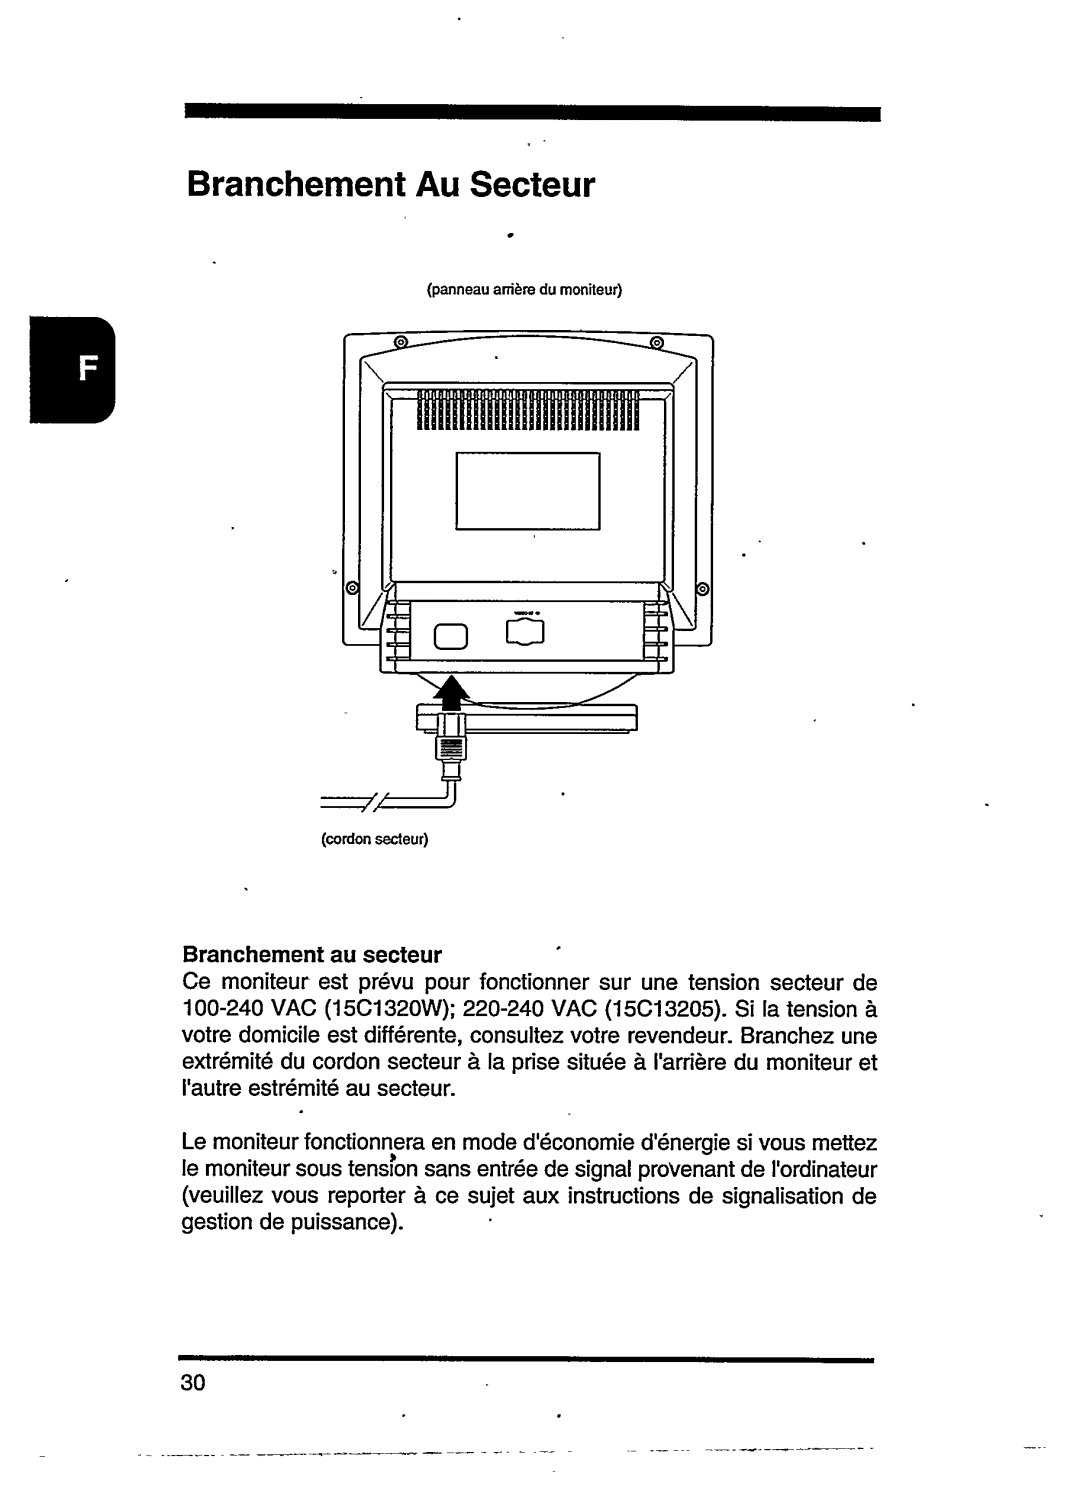 Philips VGA Digital Autoscan Color Monitor manual 